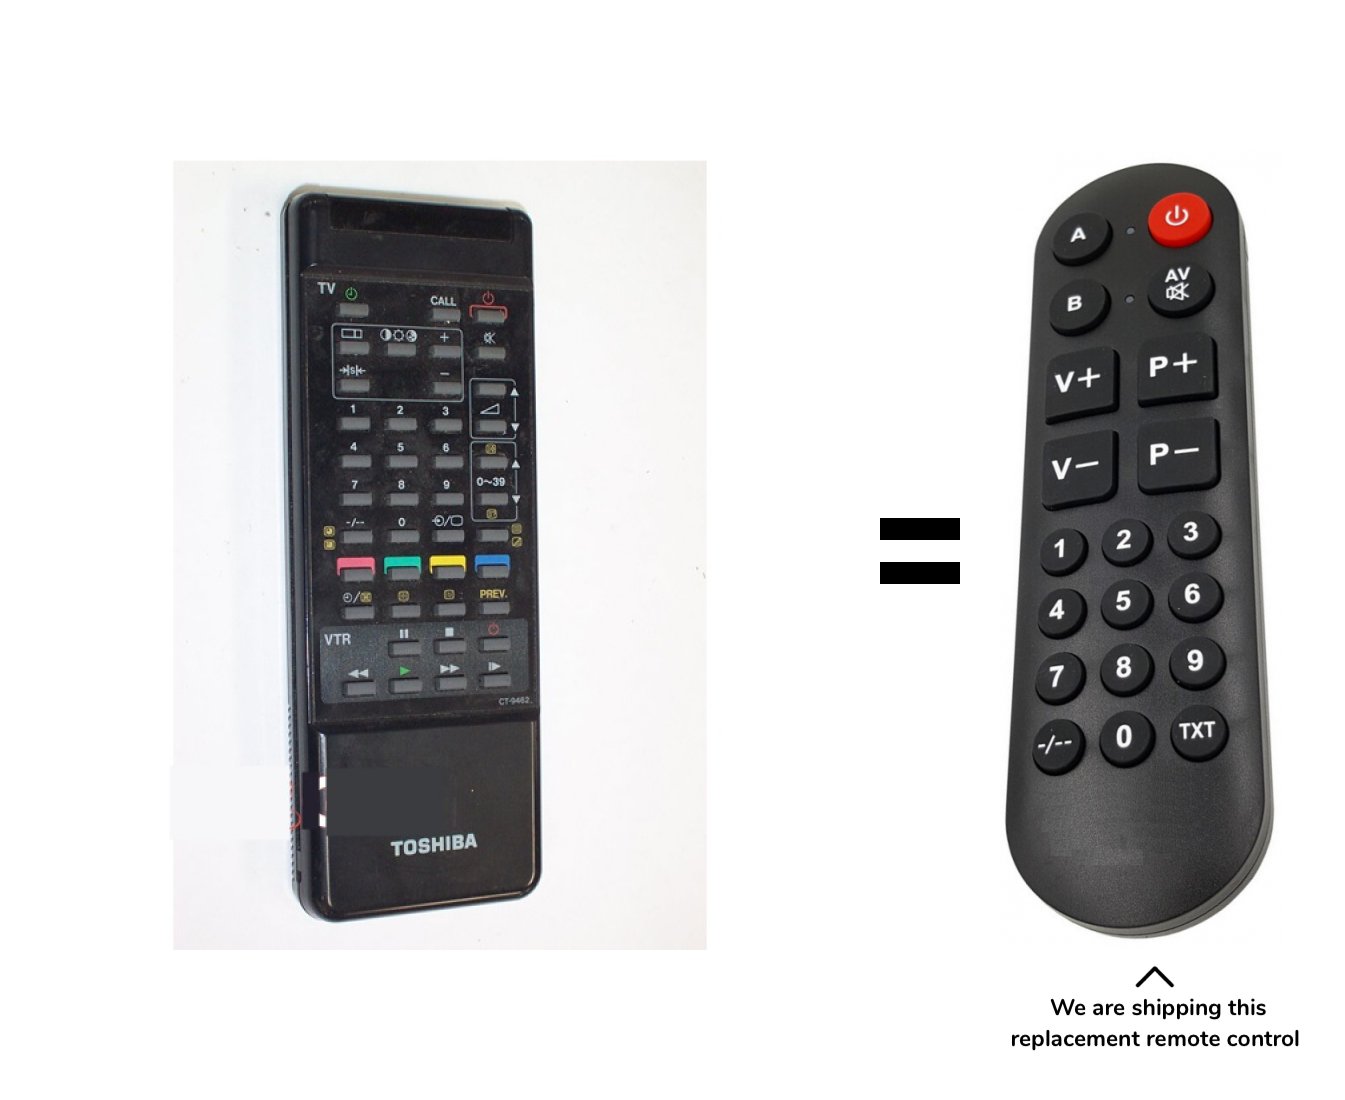 Toshiba CT-9565 remote control for seniors